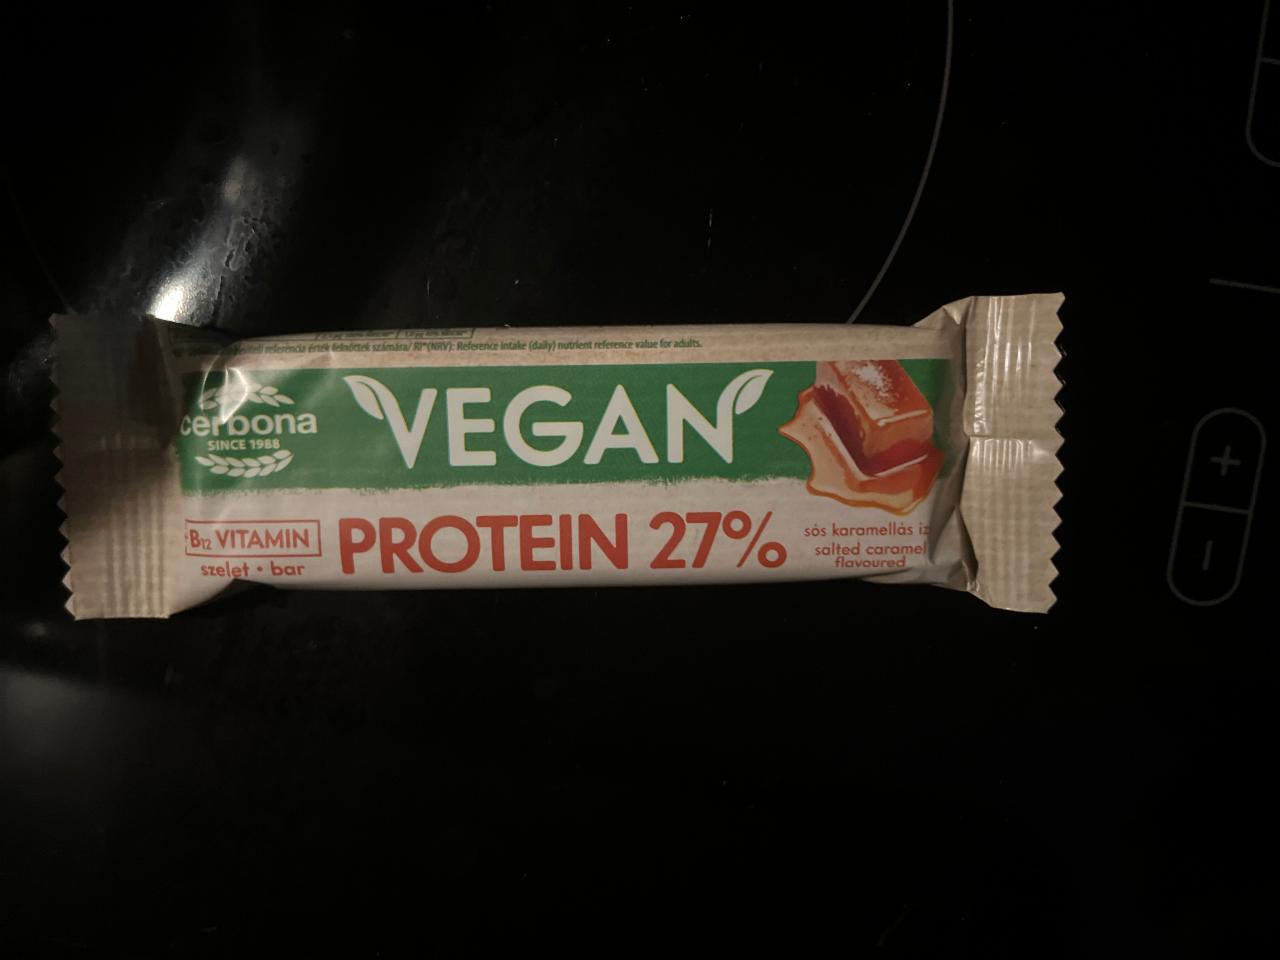 Fotografie - Vegan protein caramel Cerbona